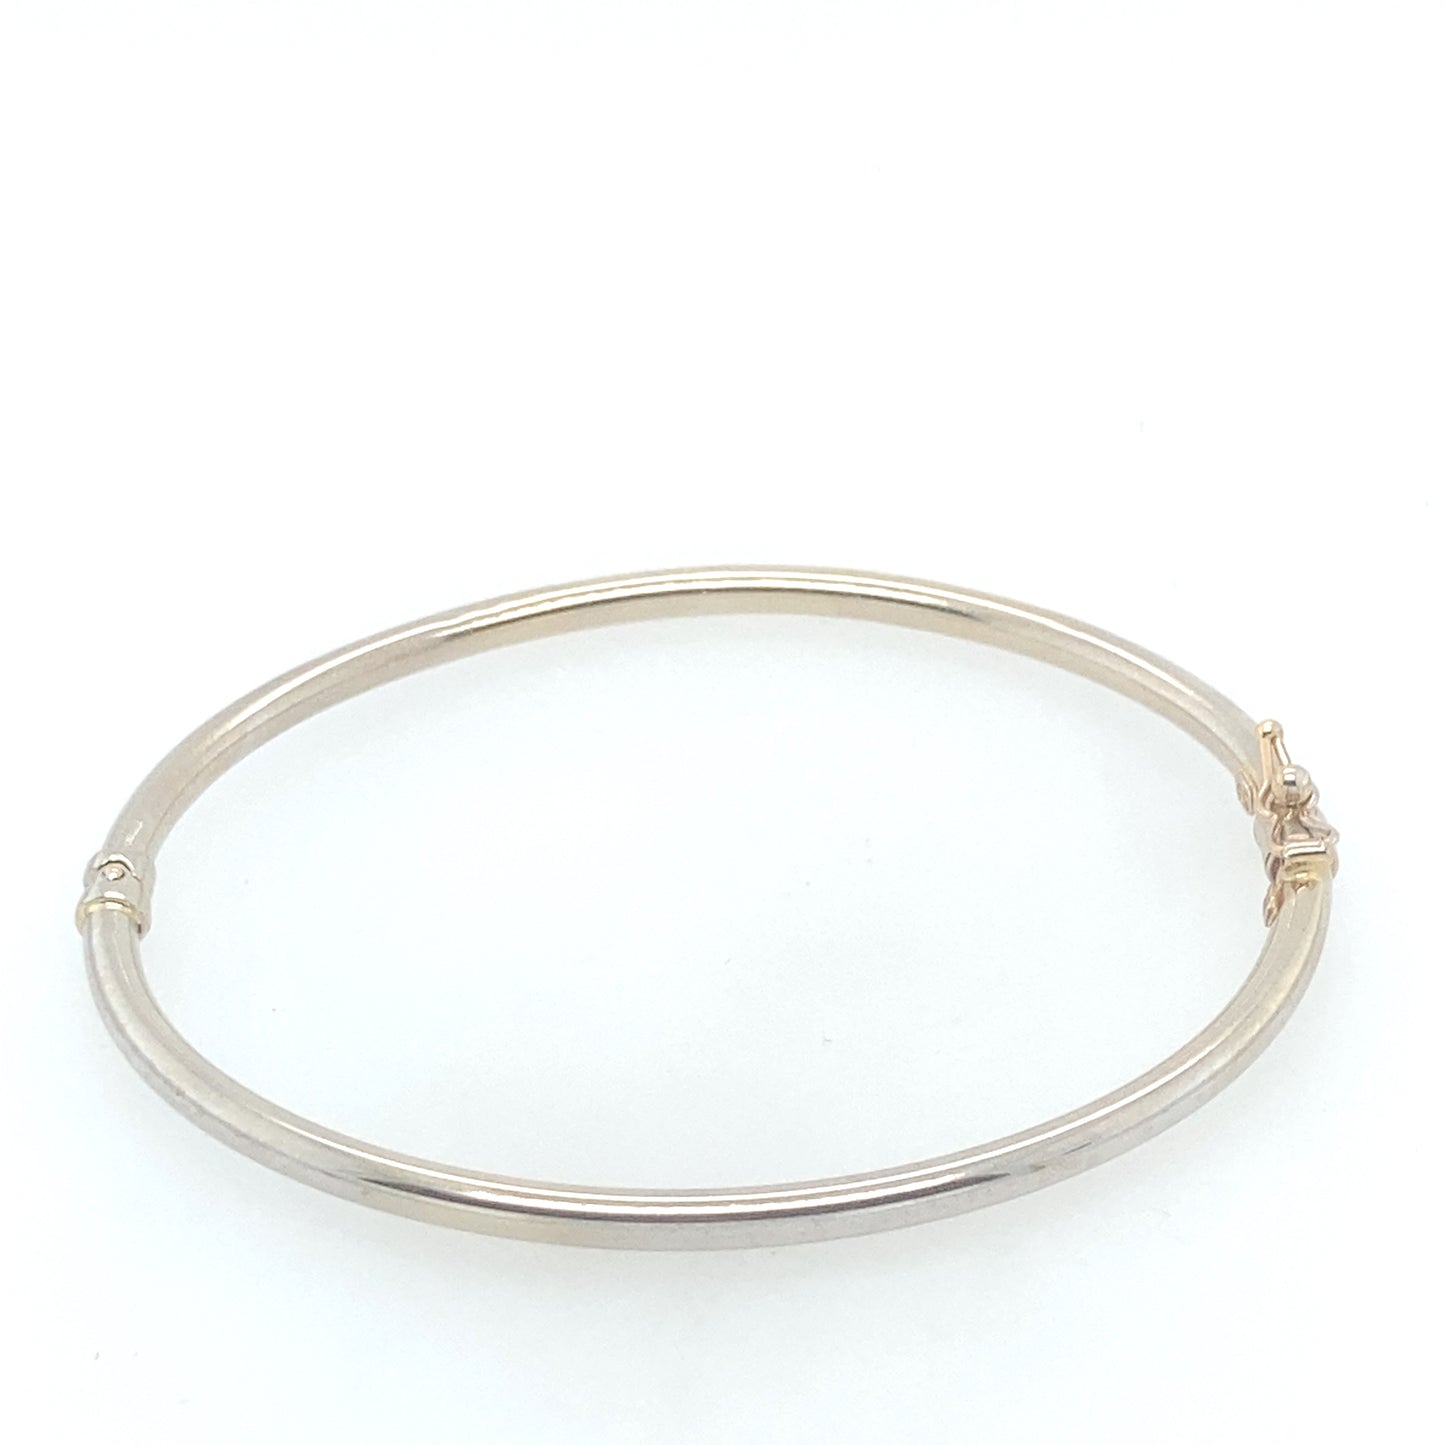 14k white gold bangle bracelet. The bracelet shape is oval. Casual piece you can wear everyday.